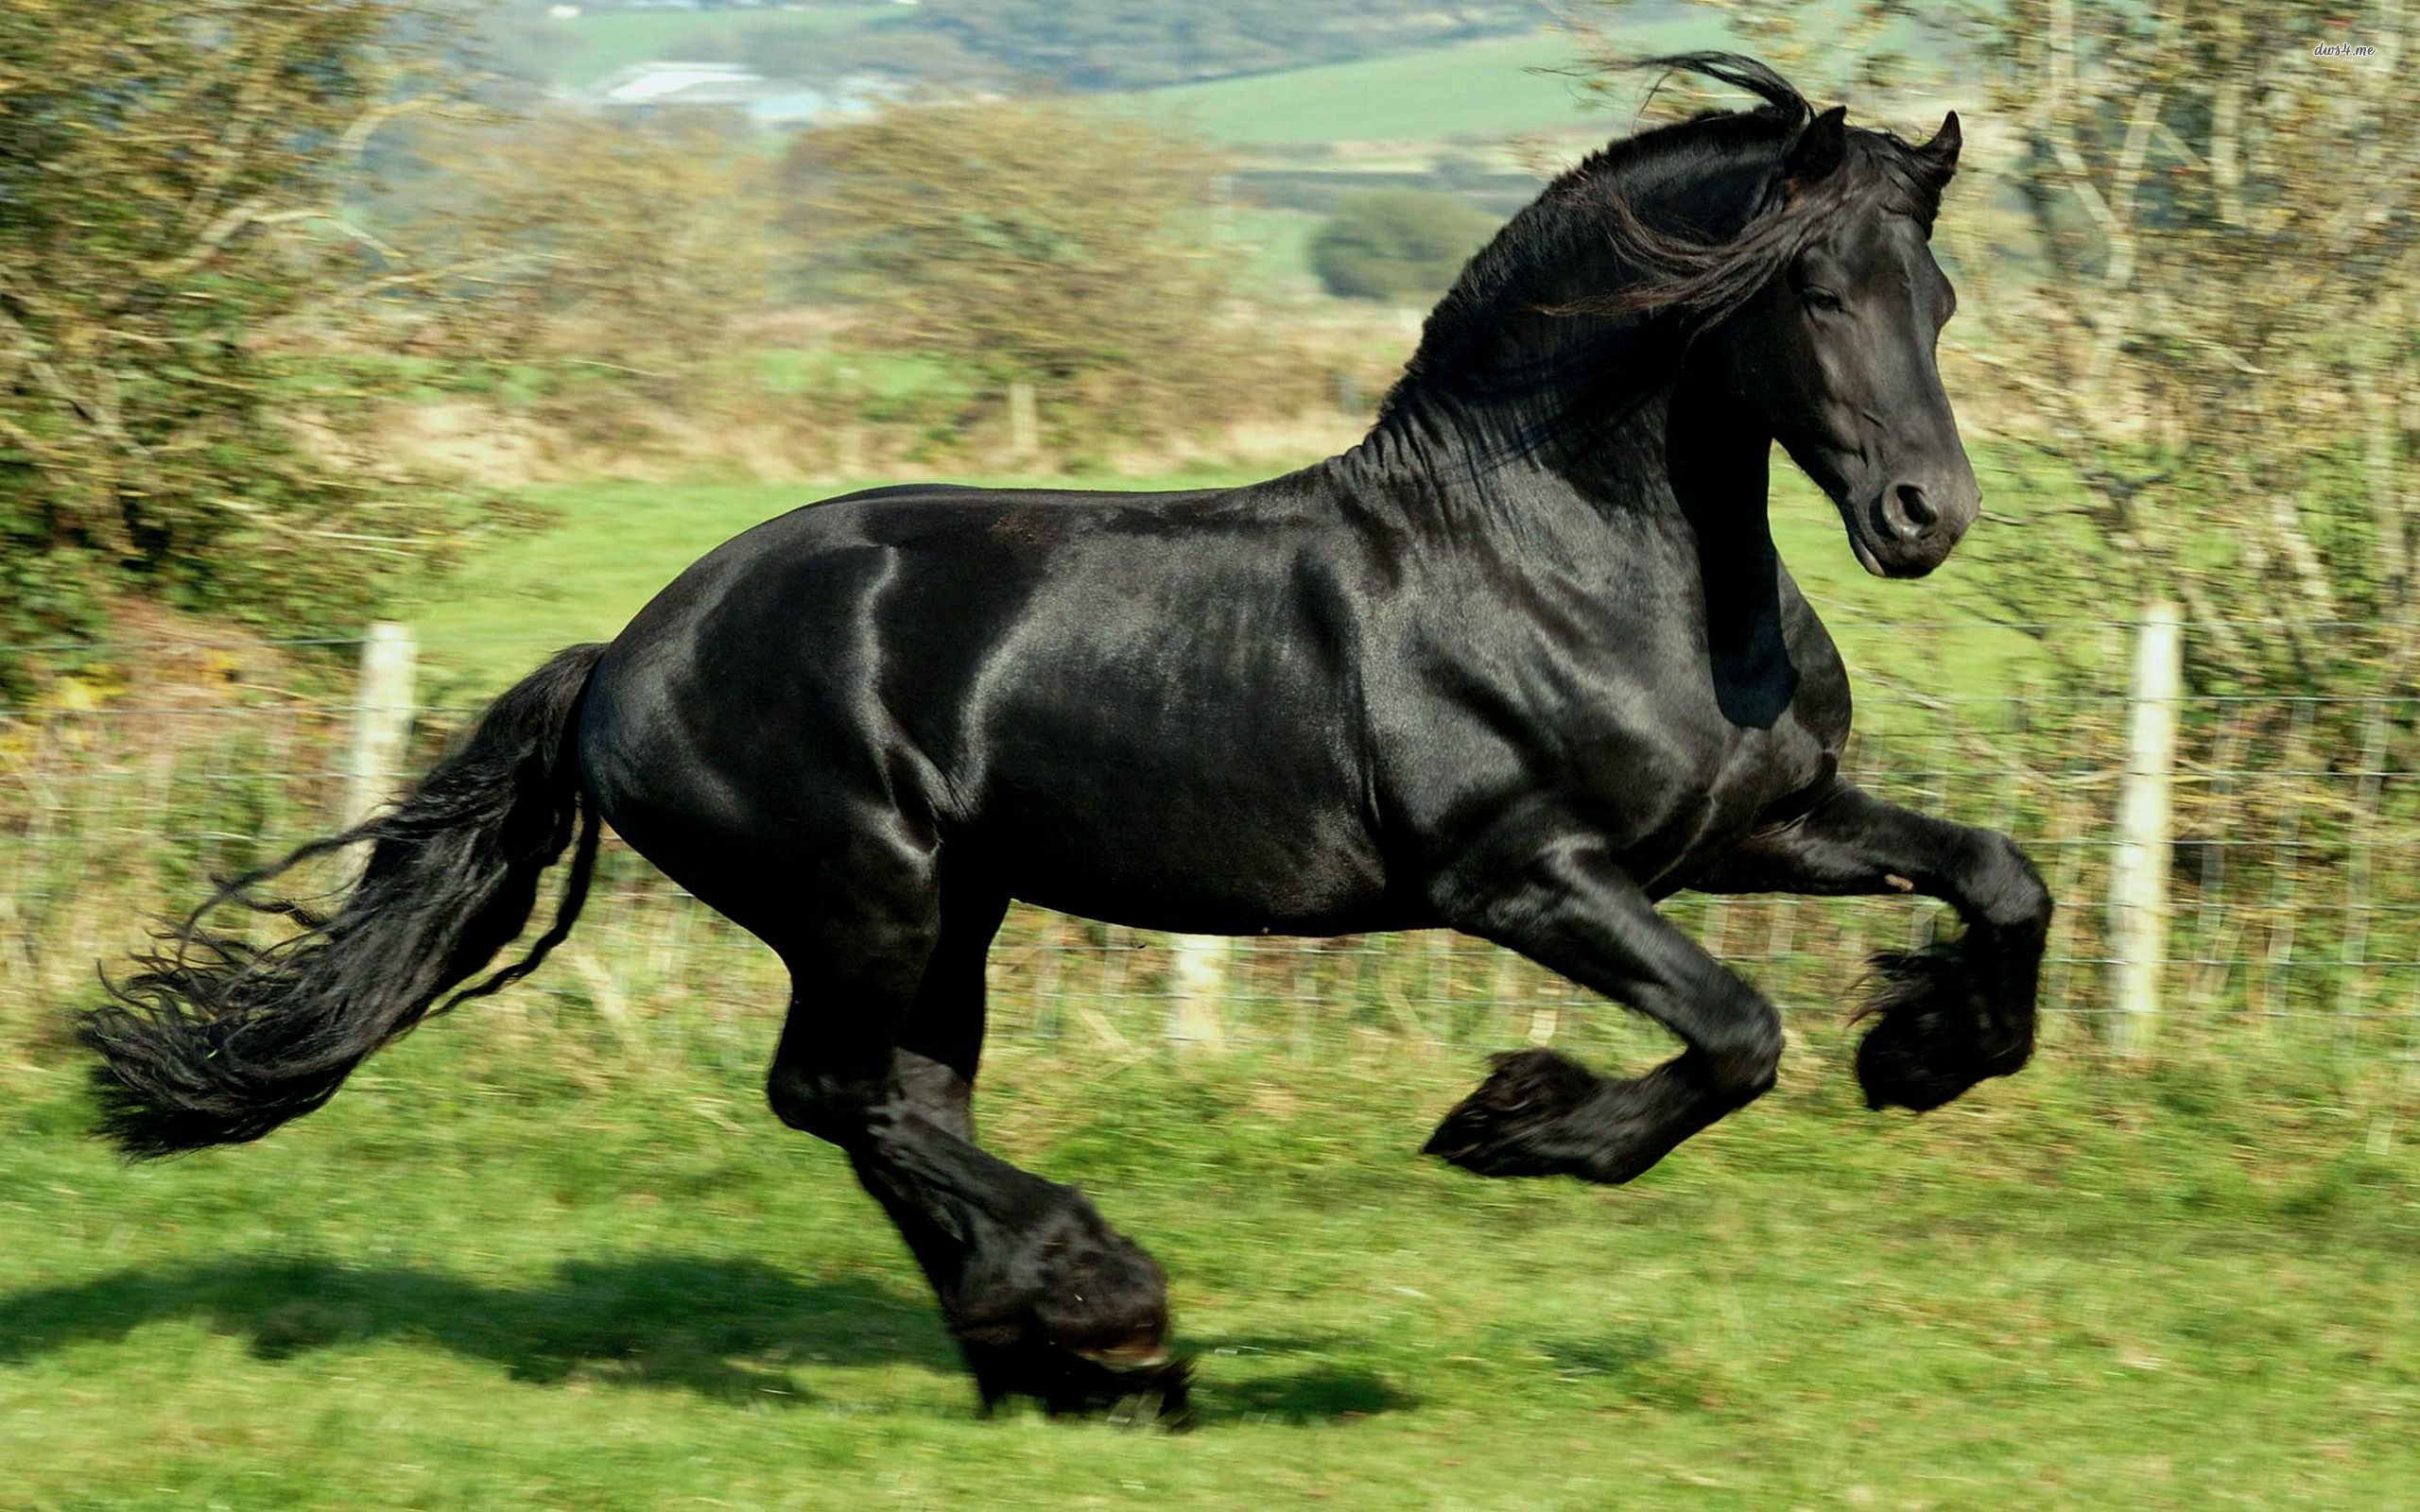 Black Mustang Horse